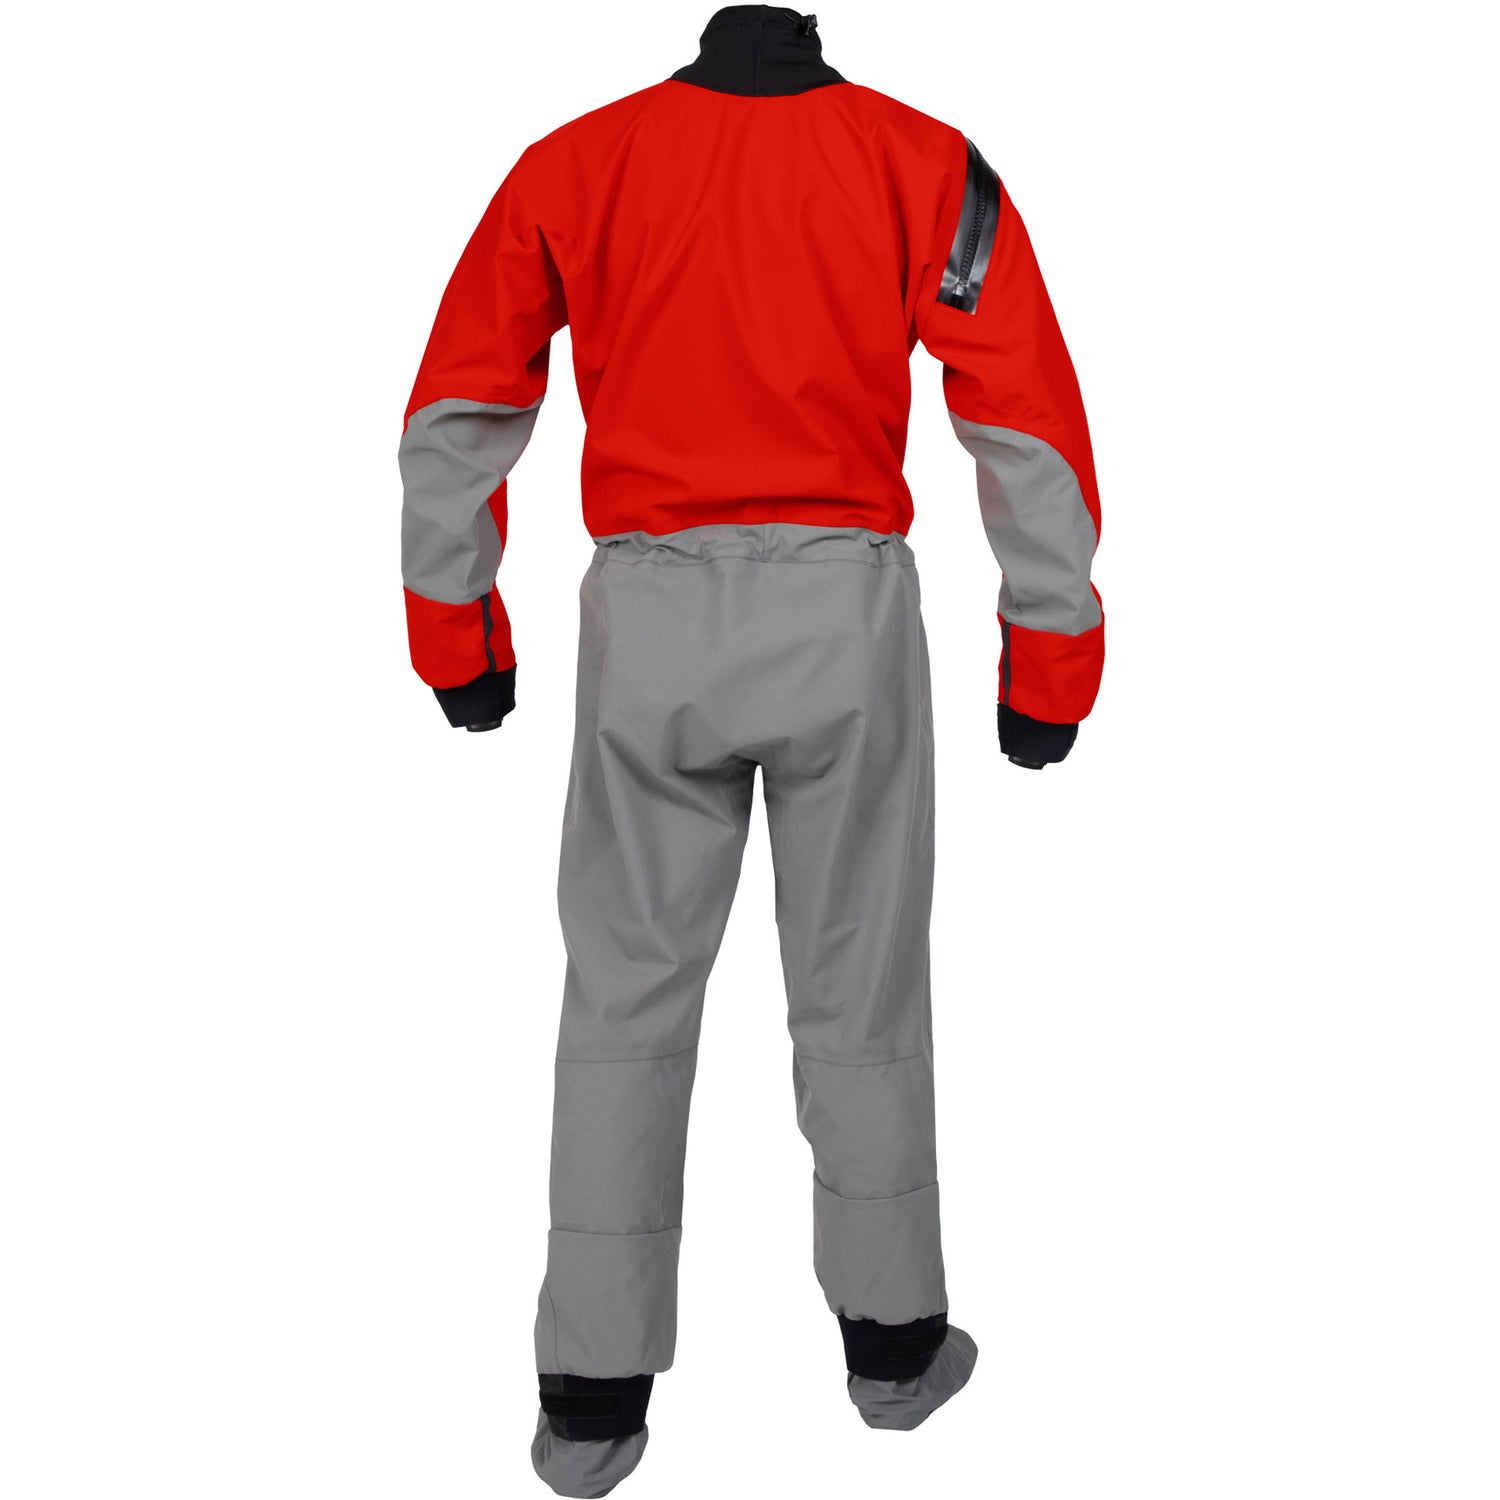 Kokatat Supernova Angler GORE-TEX Pro Semi-Dry Suit in Red back